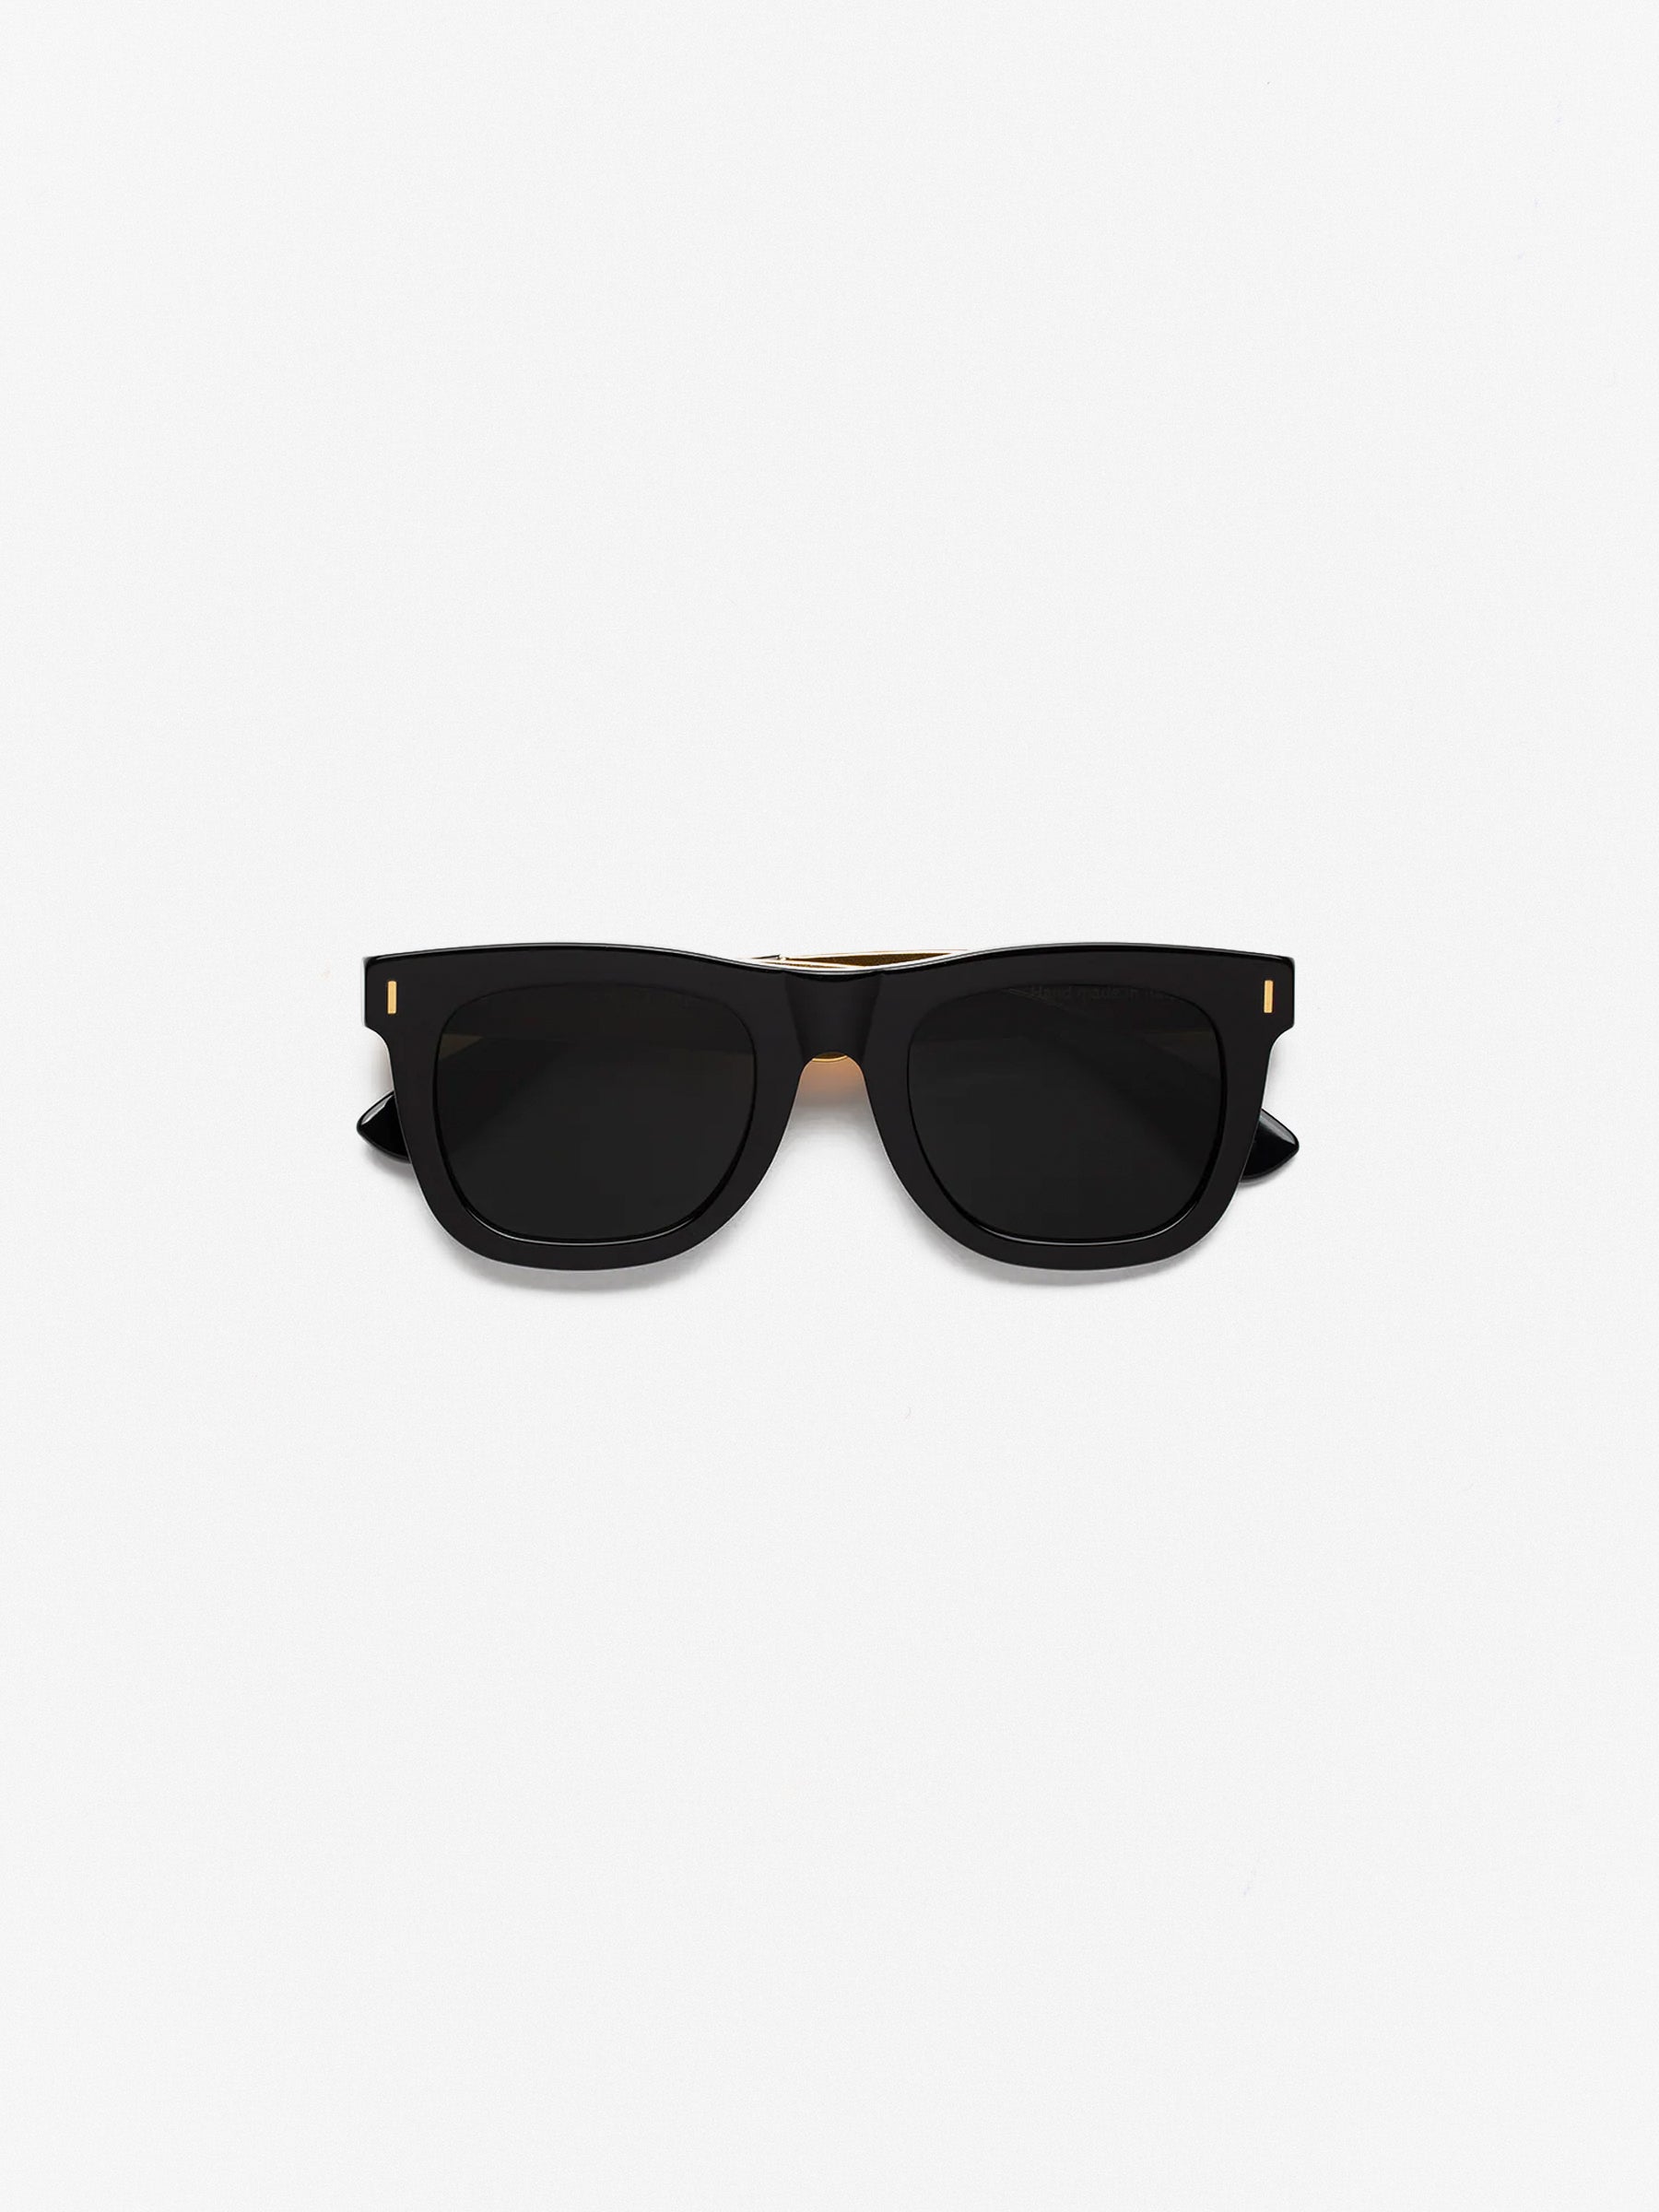 Ciccio Francis Sunglasses Black/Gold